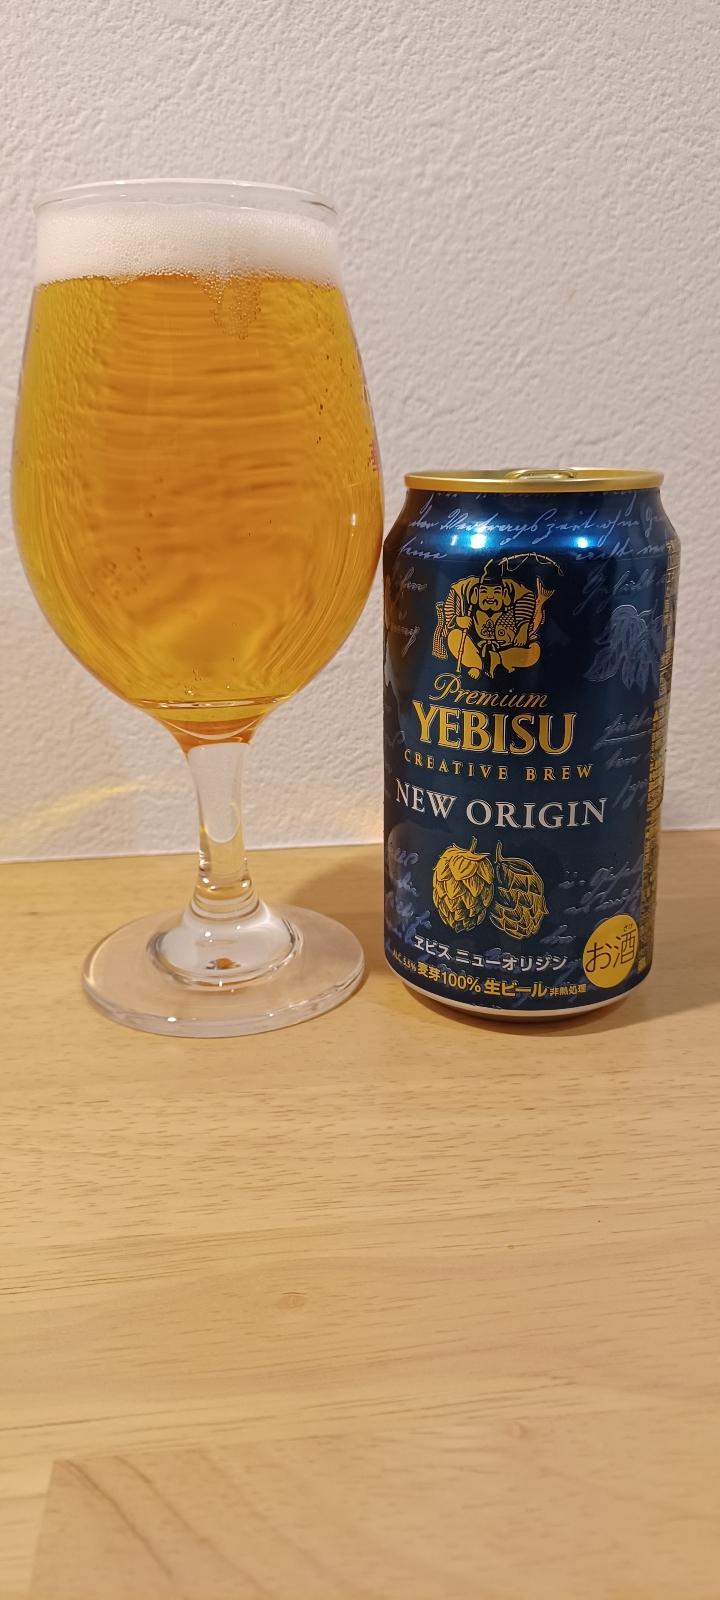 Premium Yebisu Creative Brew: New Origin